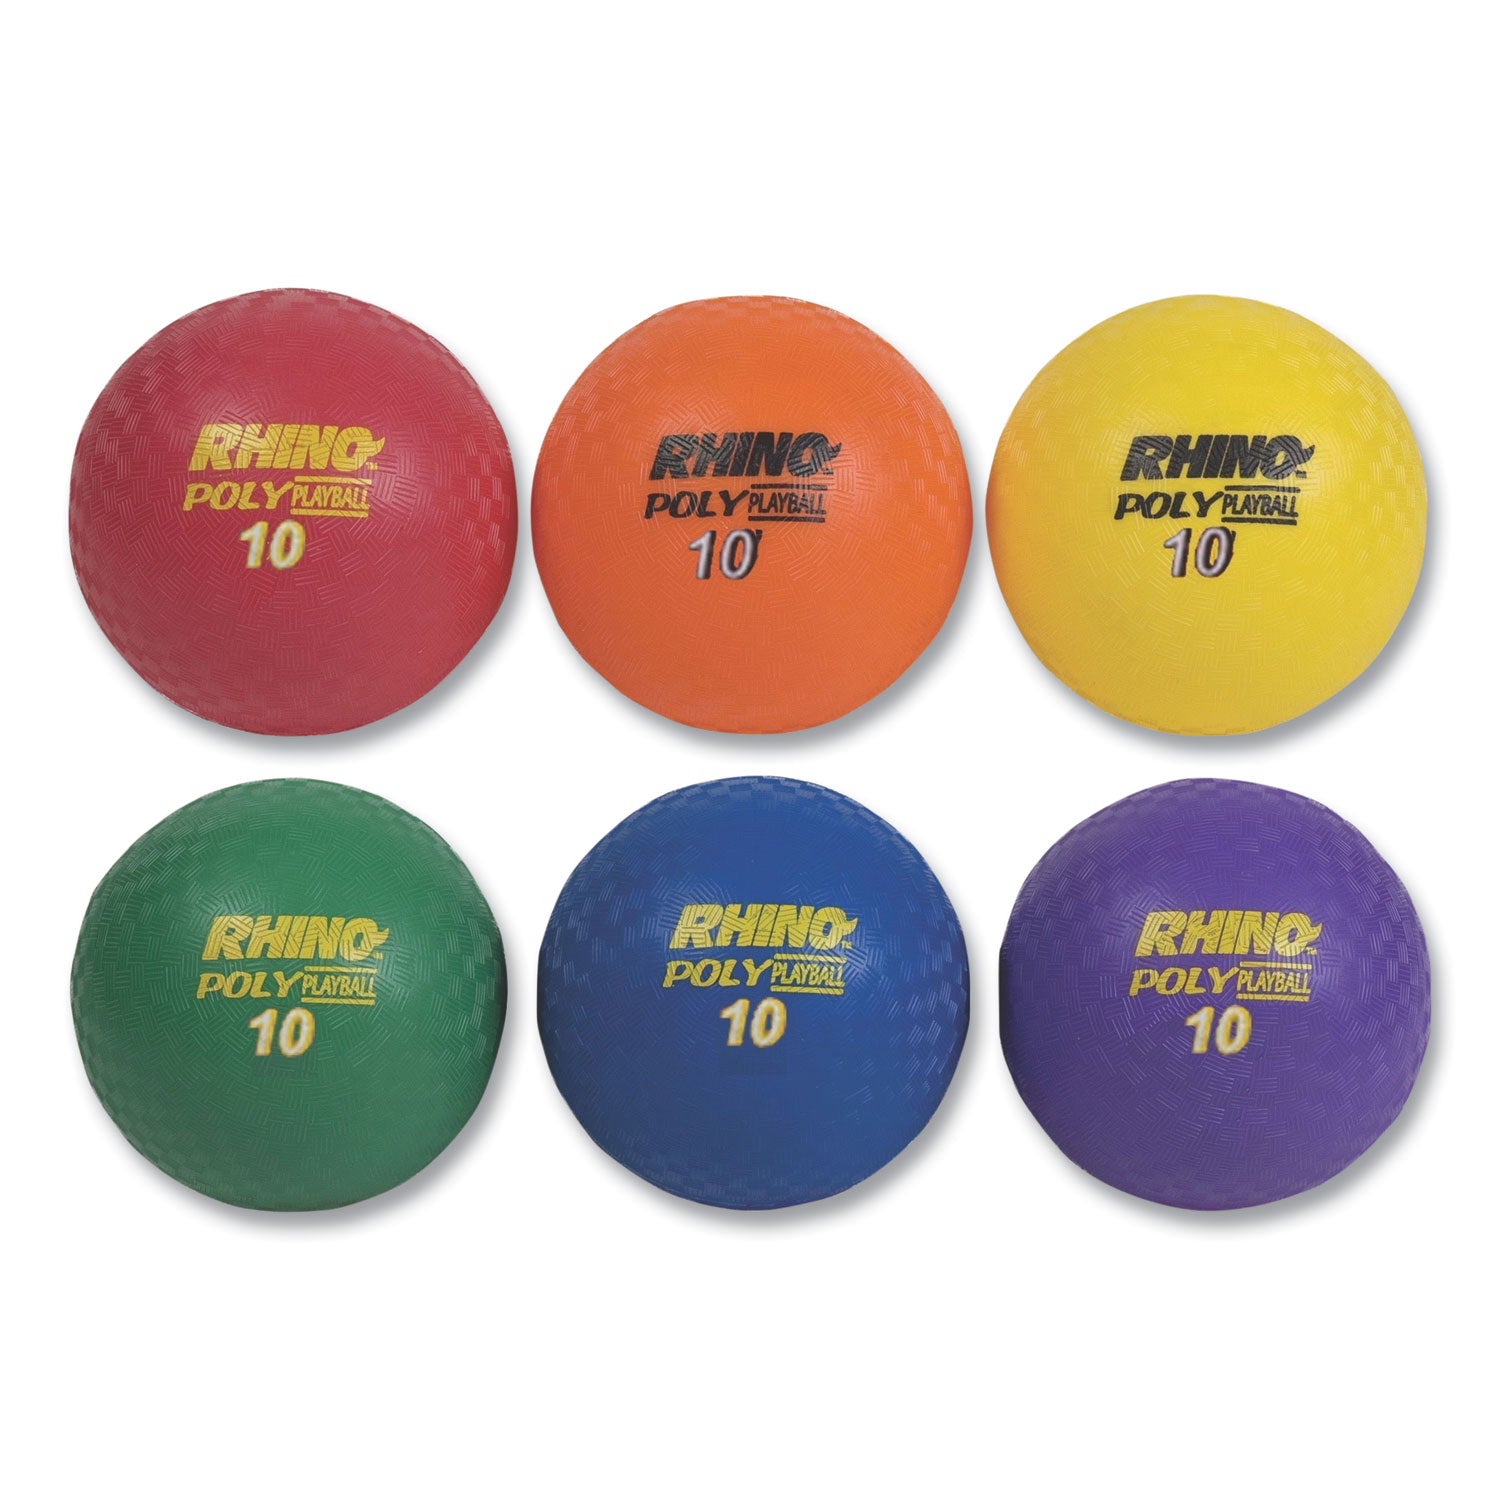 Rhino Playground Ball Set, 10" Diameter, Rubber, Assorted Colors, 6/Set - 